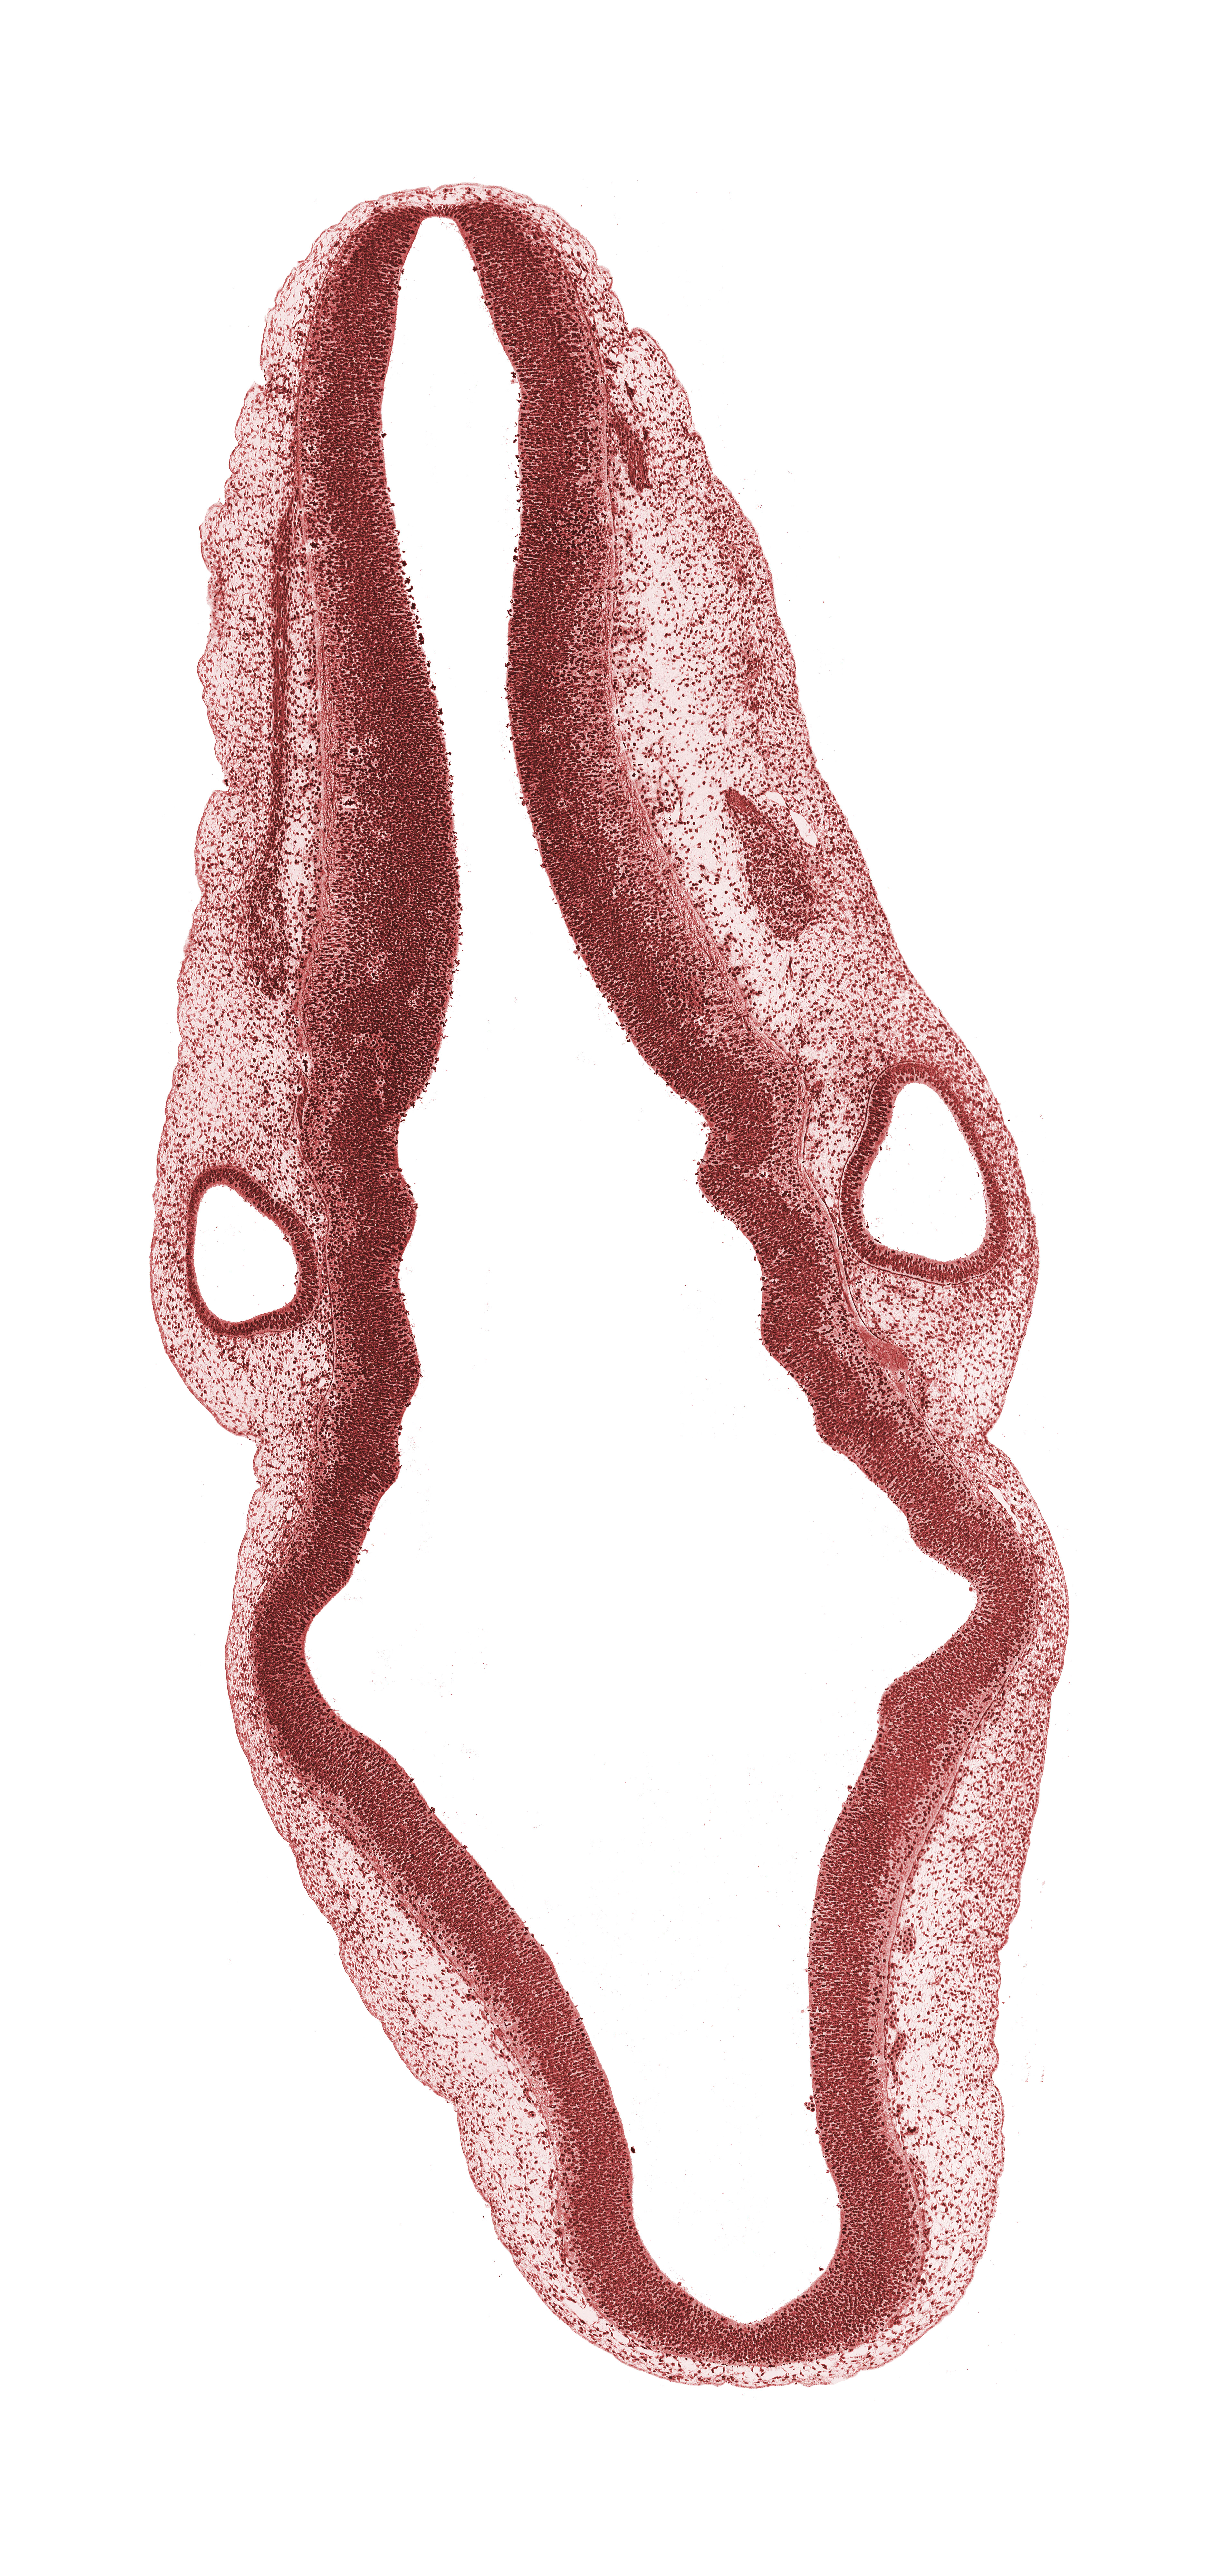 alar plate(s), basal plate of metencephalon, isthmus of rhombencephalon, mesencephalon (M2), posterior dural venous plexus, rhombencoel (fourth ventricle), rhombomere 1, rhombomere 2, rhombomere 5, rhombomere 6, roof plate, spinal accessory nerve (CN XI), sulcus limitans, superior ganglion of vagus nerve (CN X), transverse rhombencephalic sulcus, vestibular part of otic vesicle